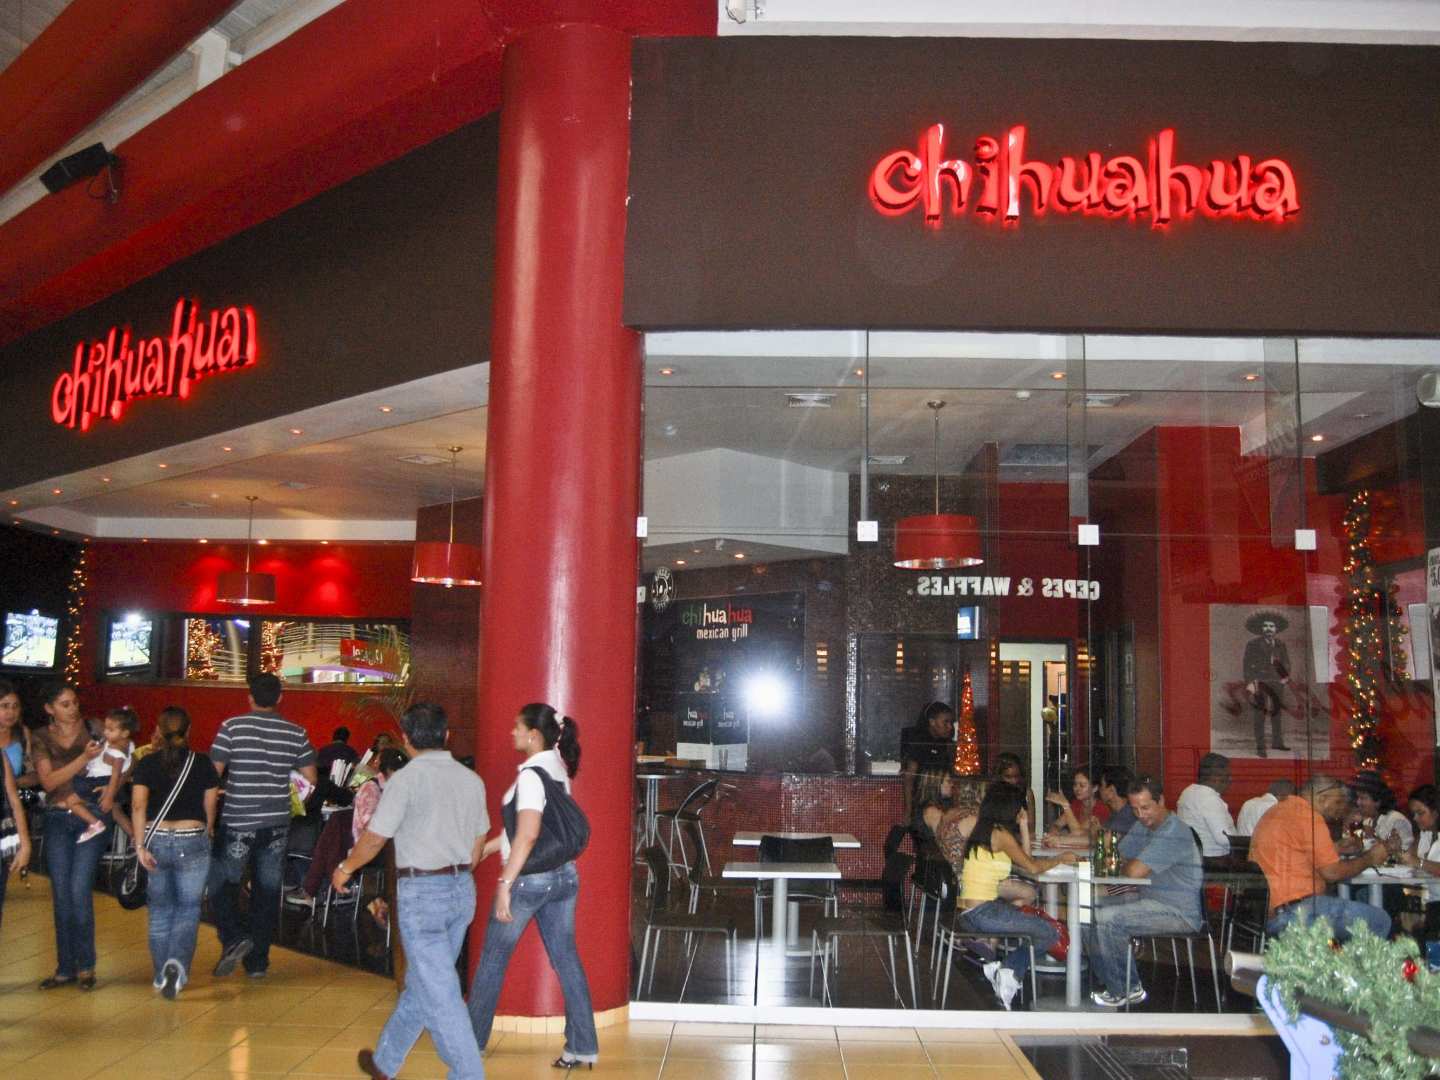 Chihuahua Mexican Grill en Panamá